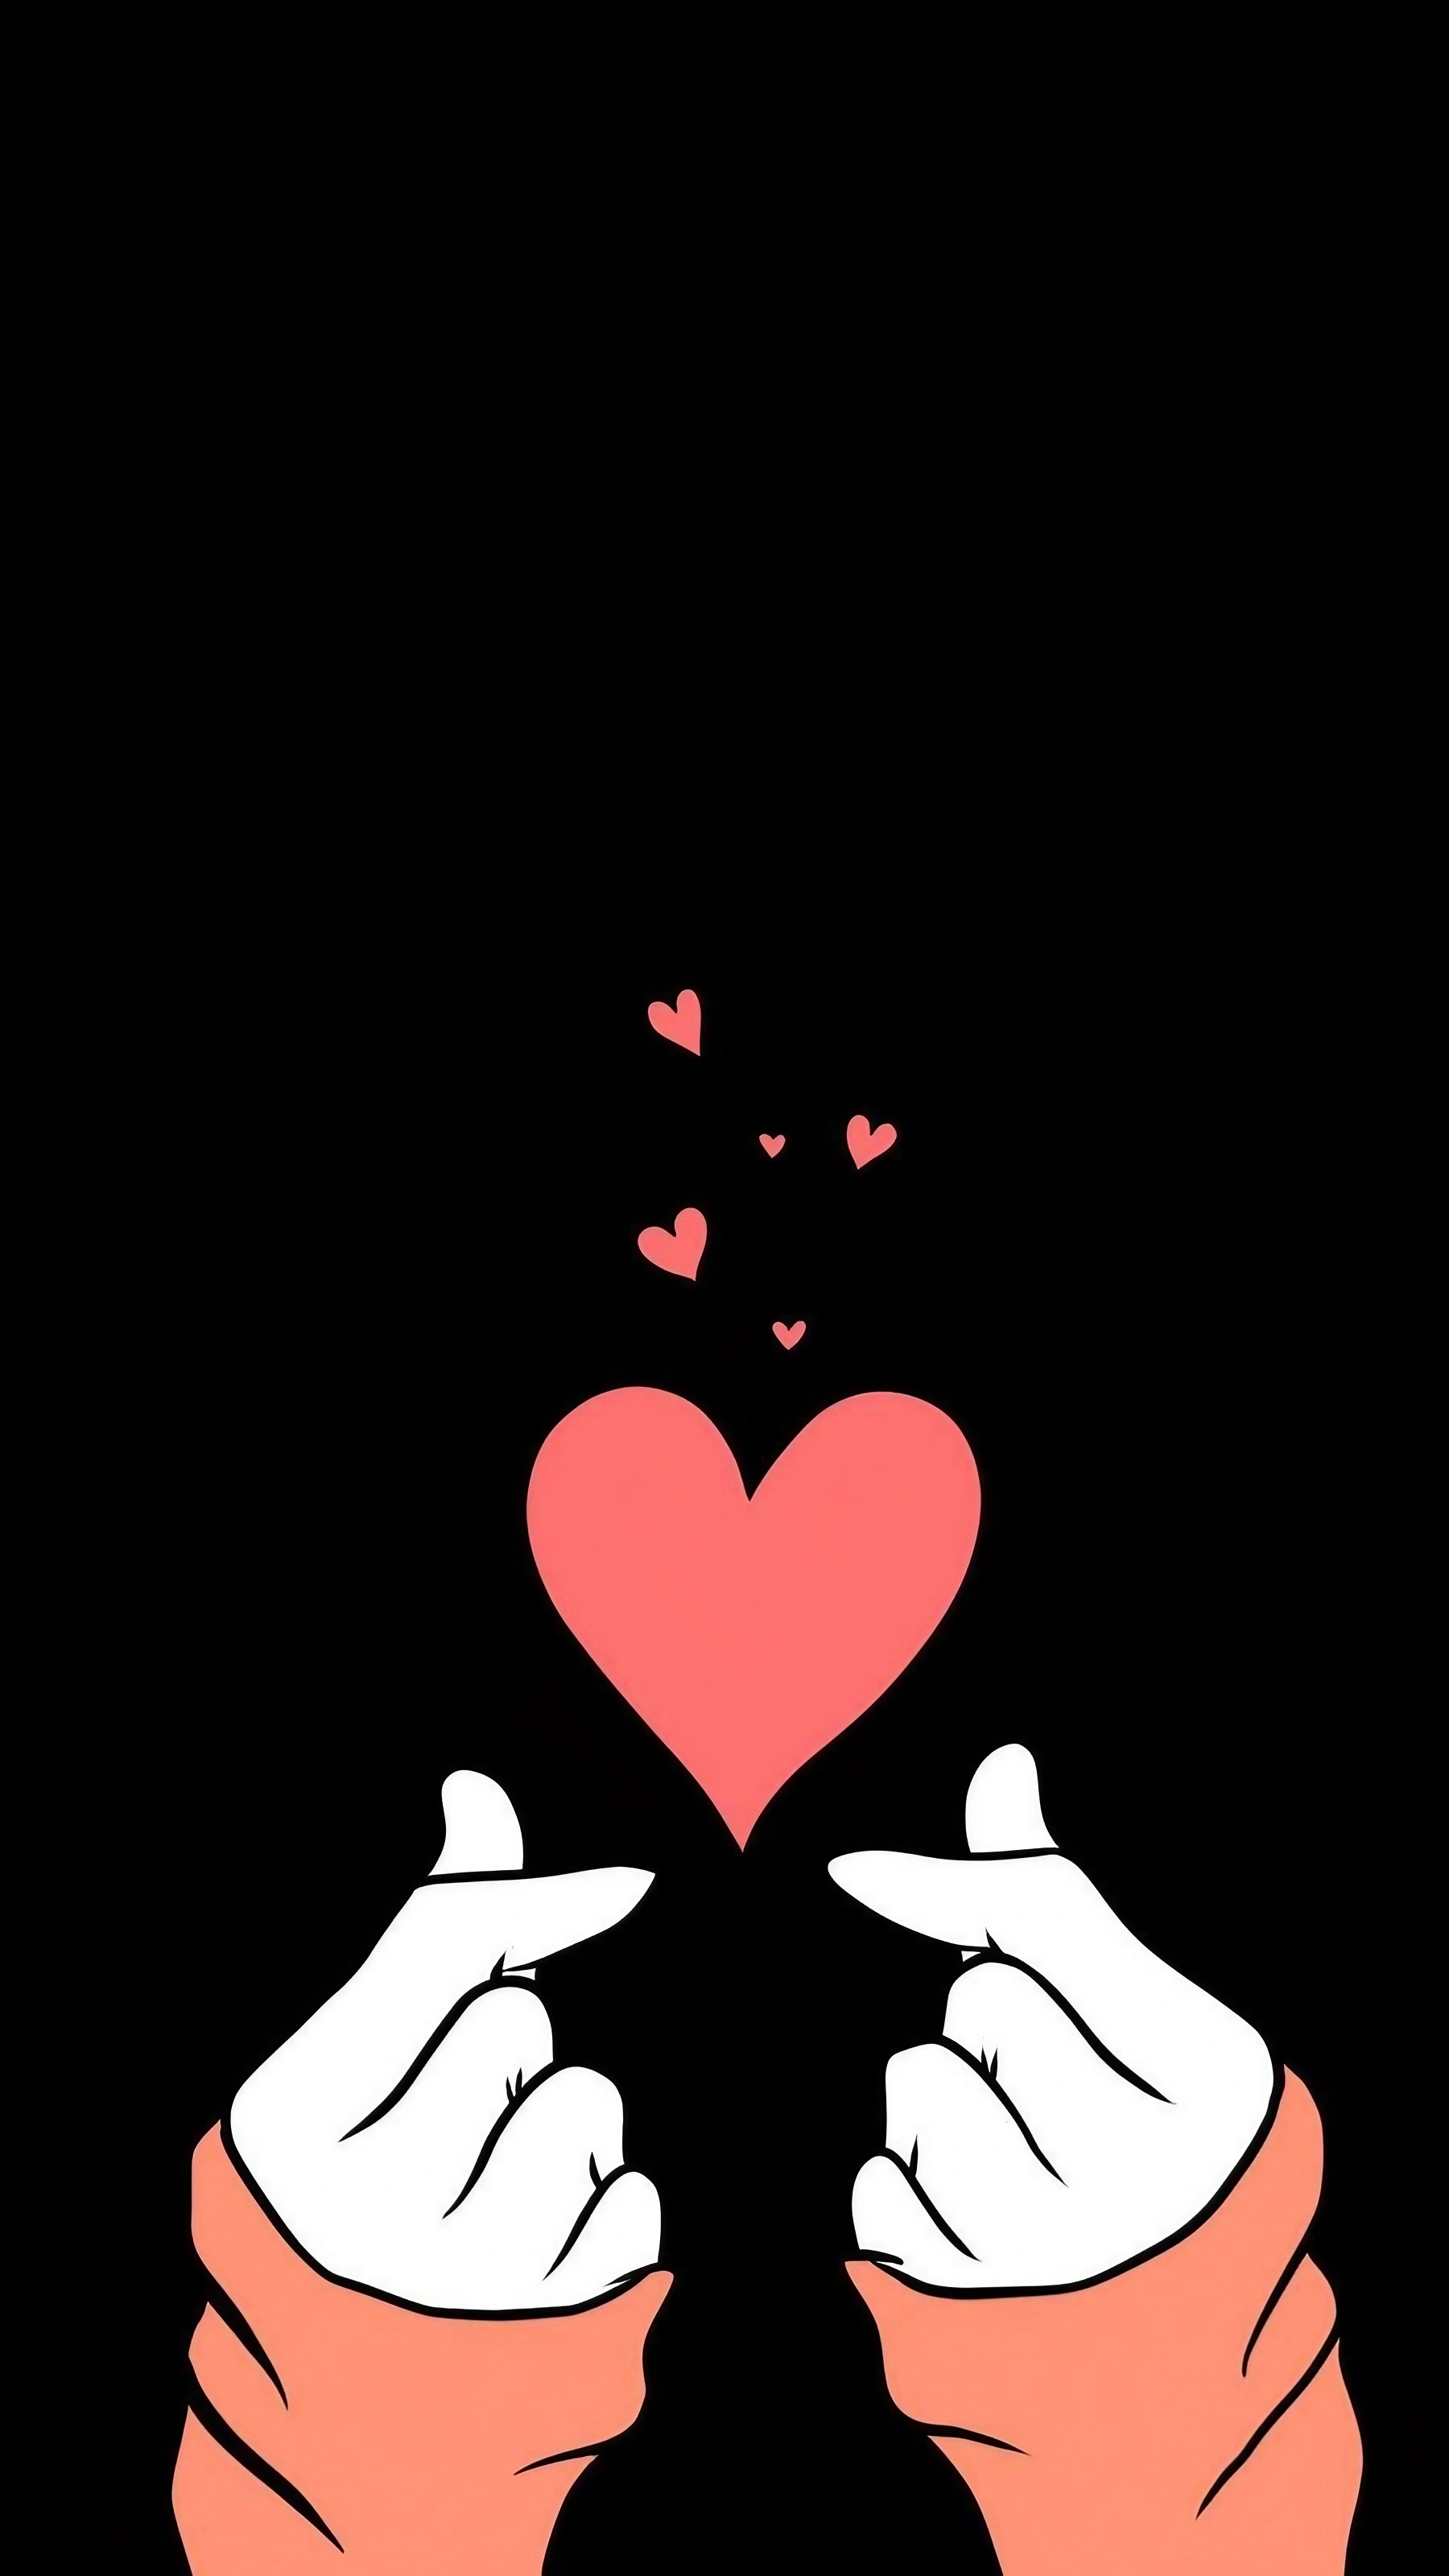 Finger Love - Two Hands Making Heart Symbol